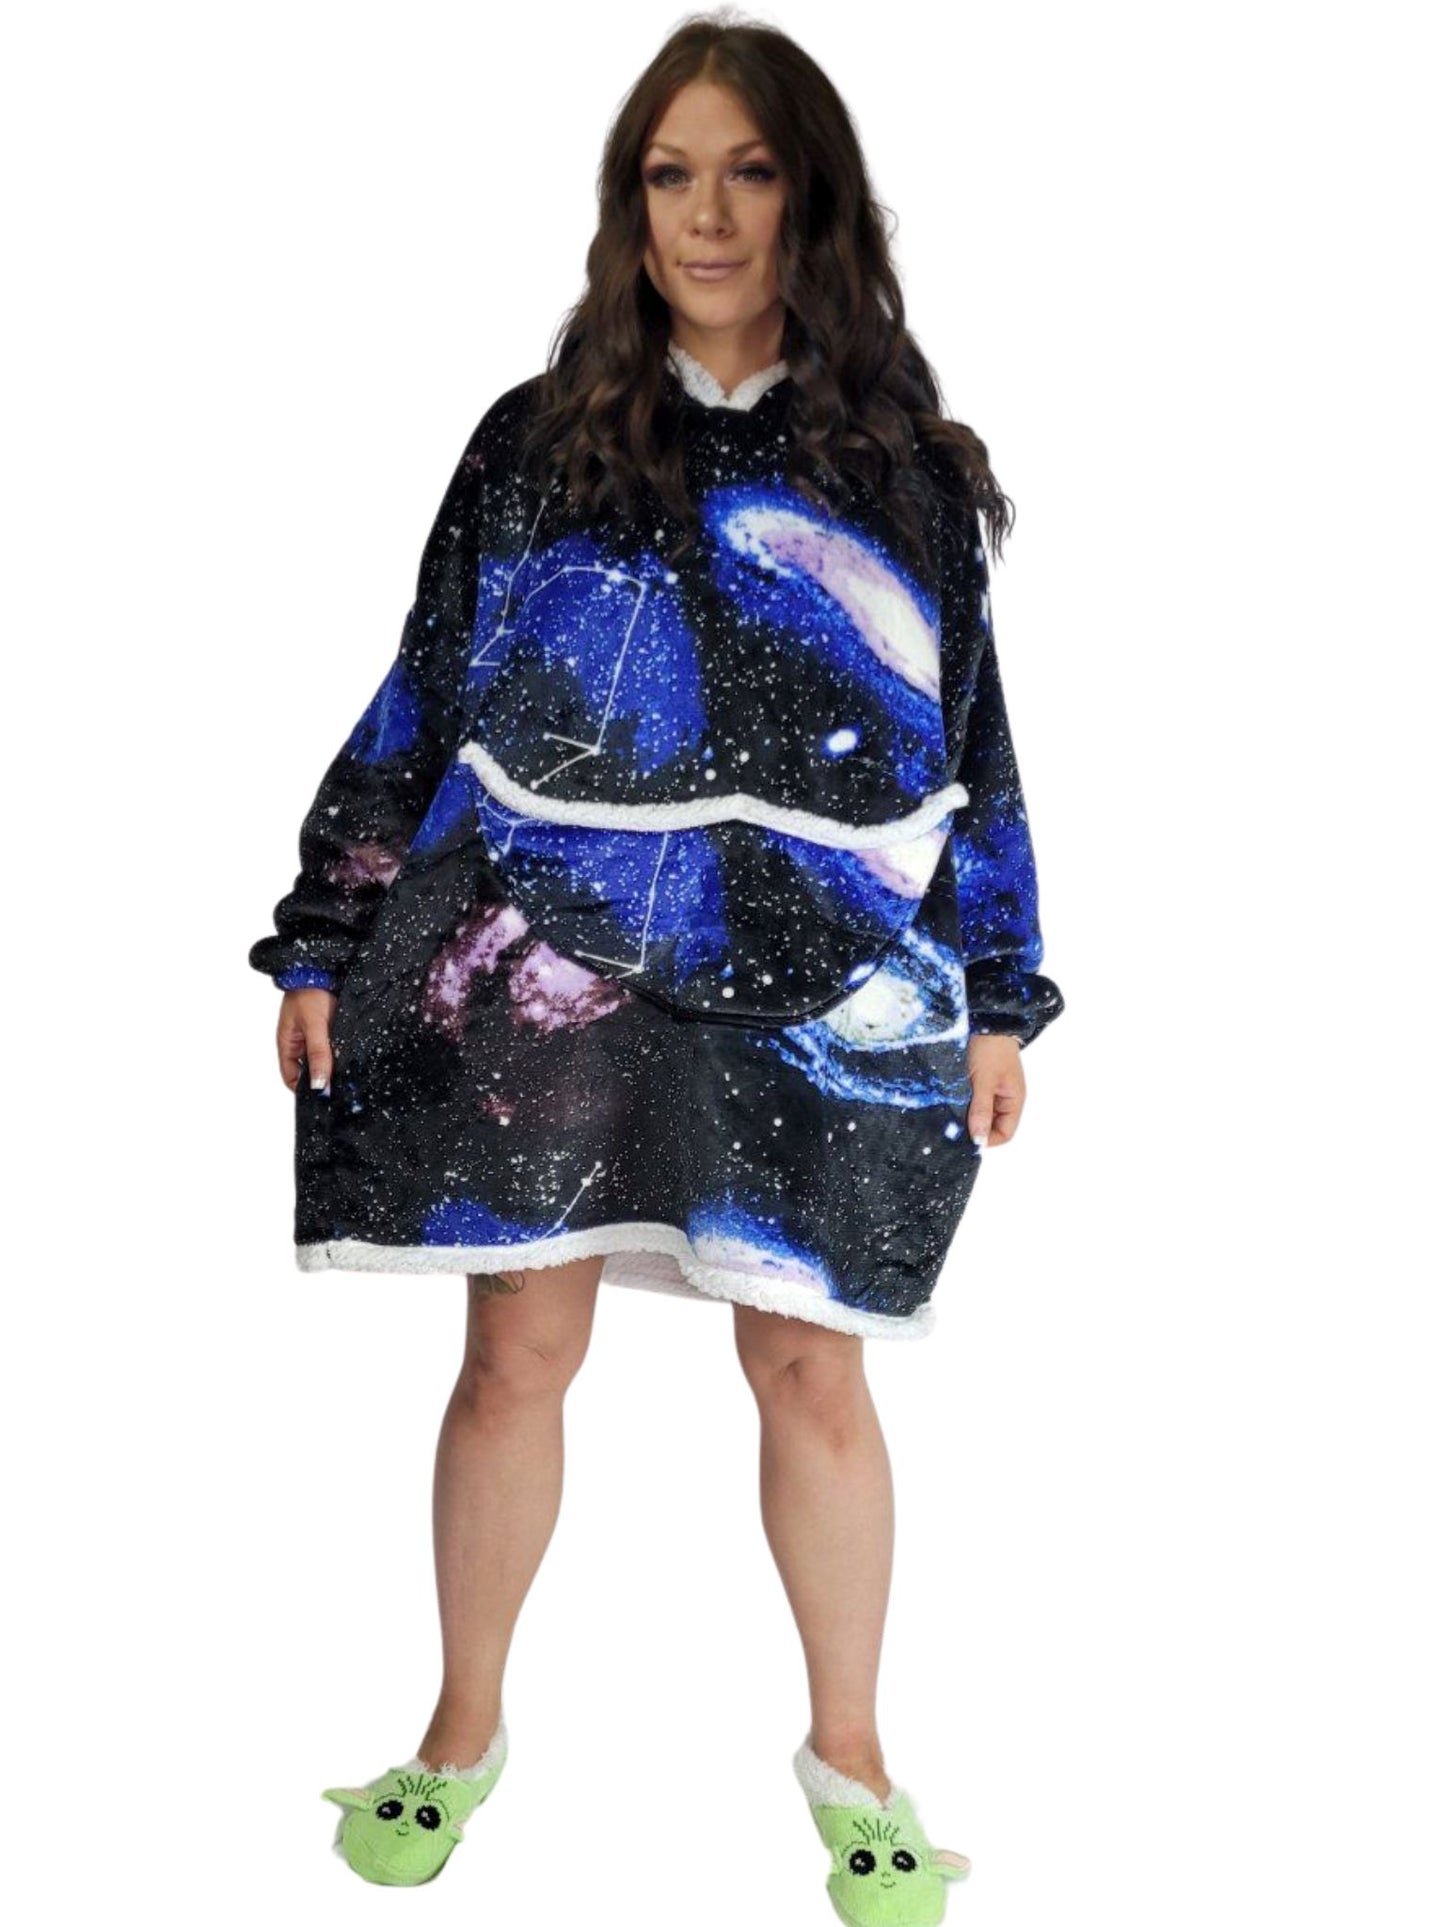 Oversized Blanket SNOODI Jumpers- 5 designs oversized hoody Aambers Goodies xx Midnight Galaxy - 6-22 au (XS-5XL) 